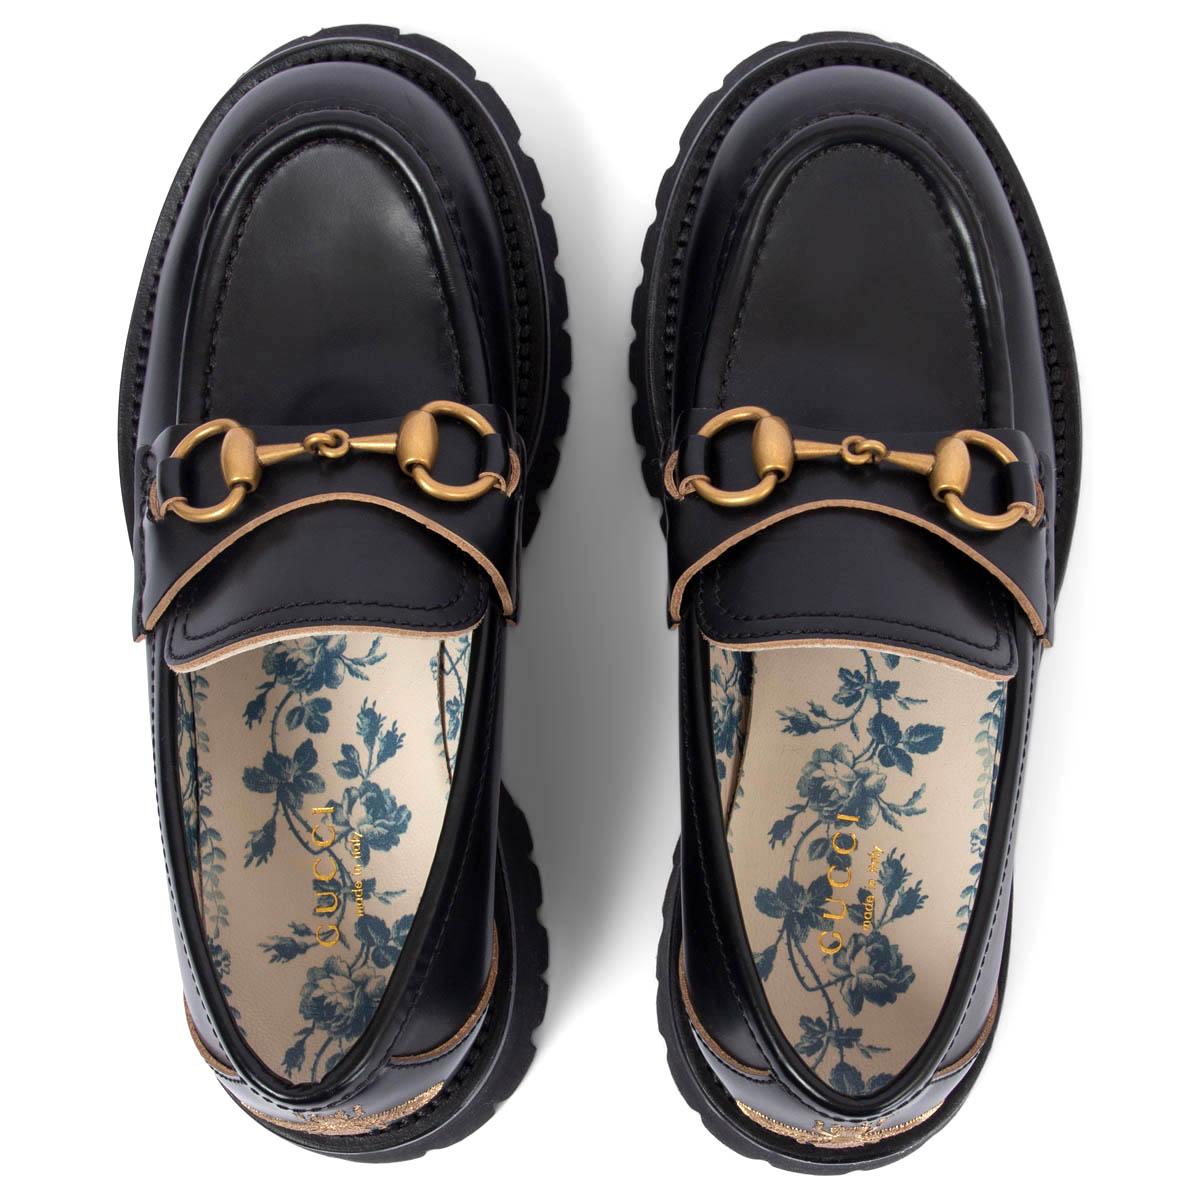 Women's GUCCI black leather LUG SOLE HORSEBIT Loafers Flats Shoes 35.5